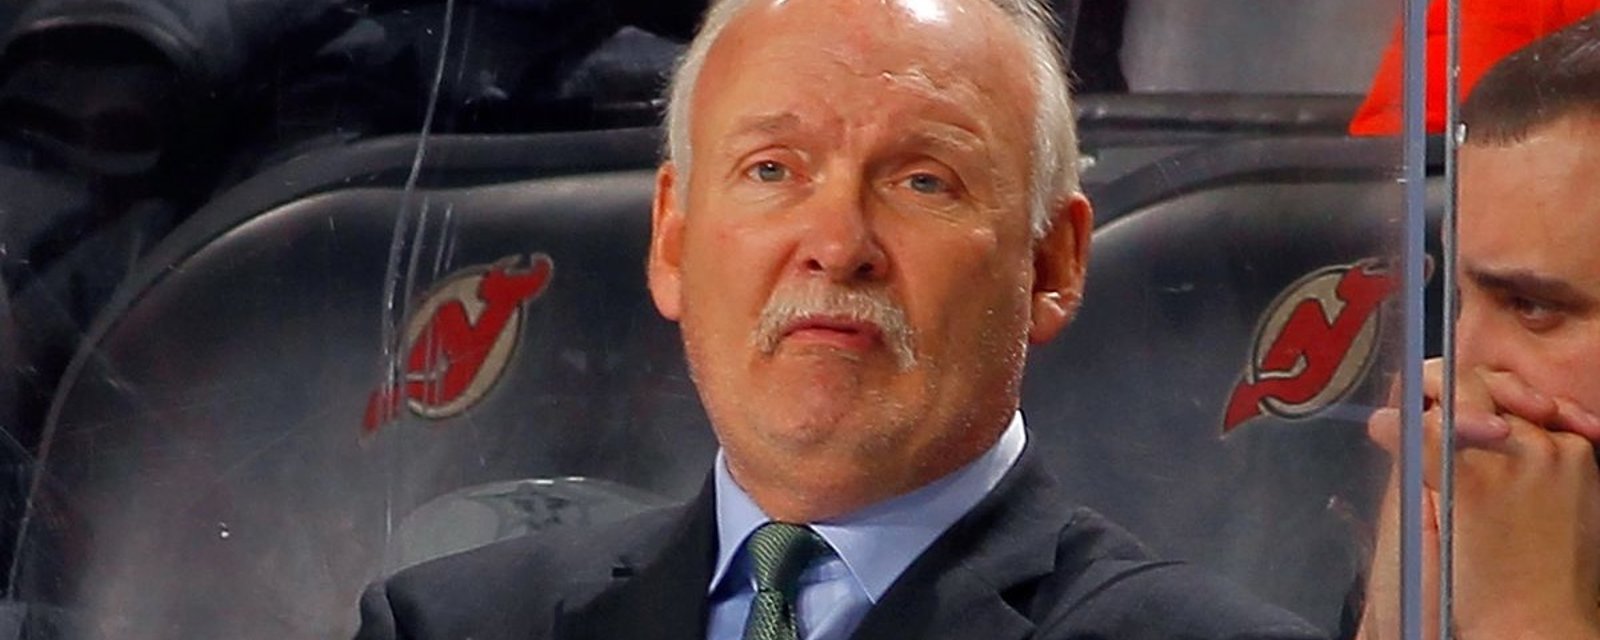 Terrible tragedy strikes long time NHL head coach Lindy Ruff.